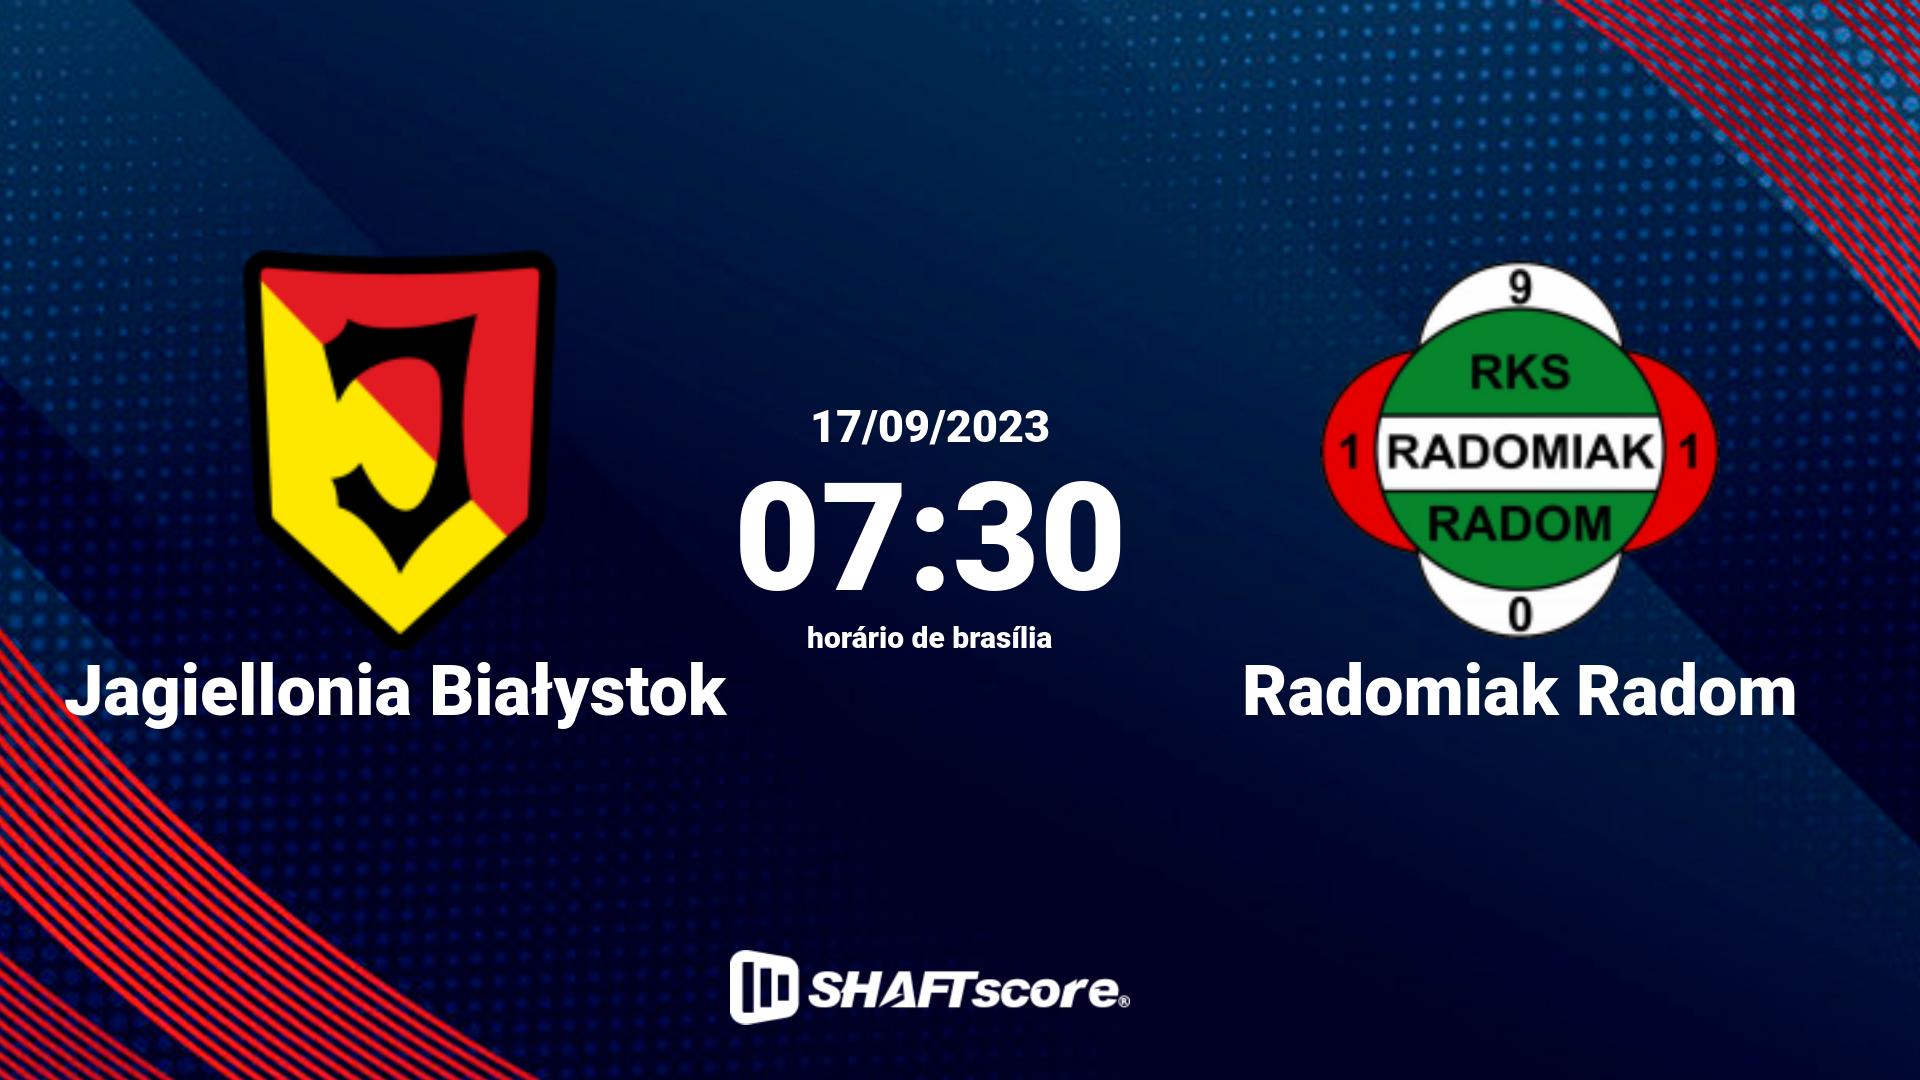 Estatísticas do jogo Jagiellonia Białystok vs Radomiak Radom 17.09 07:30